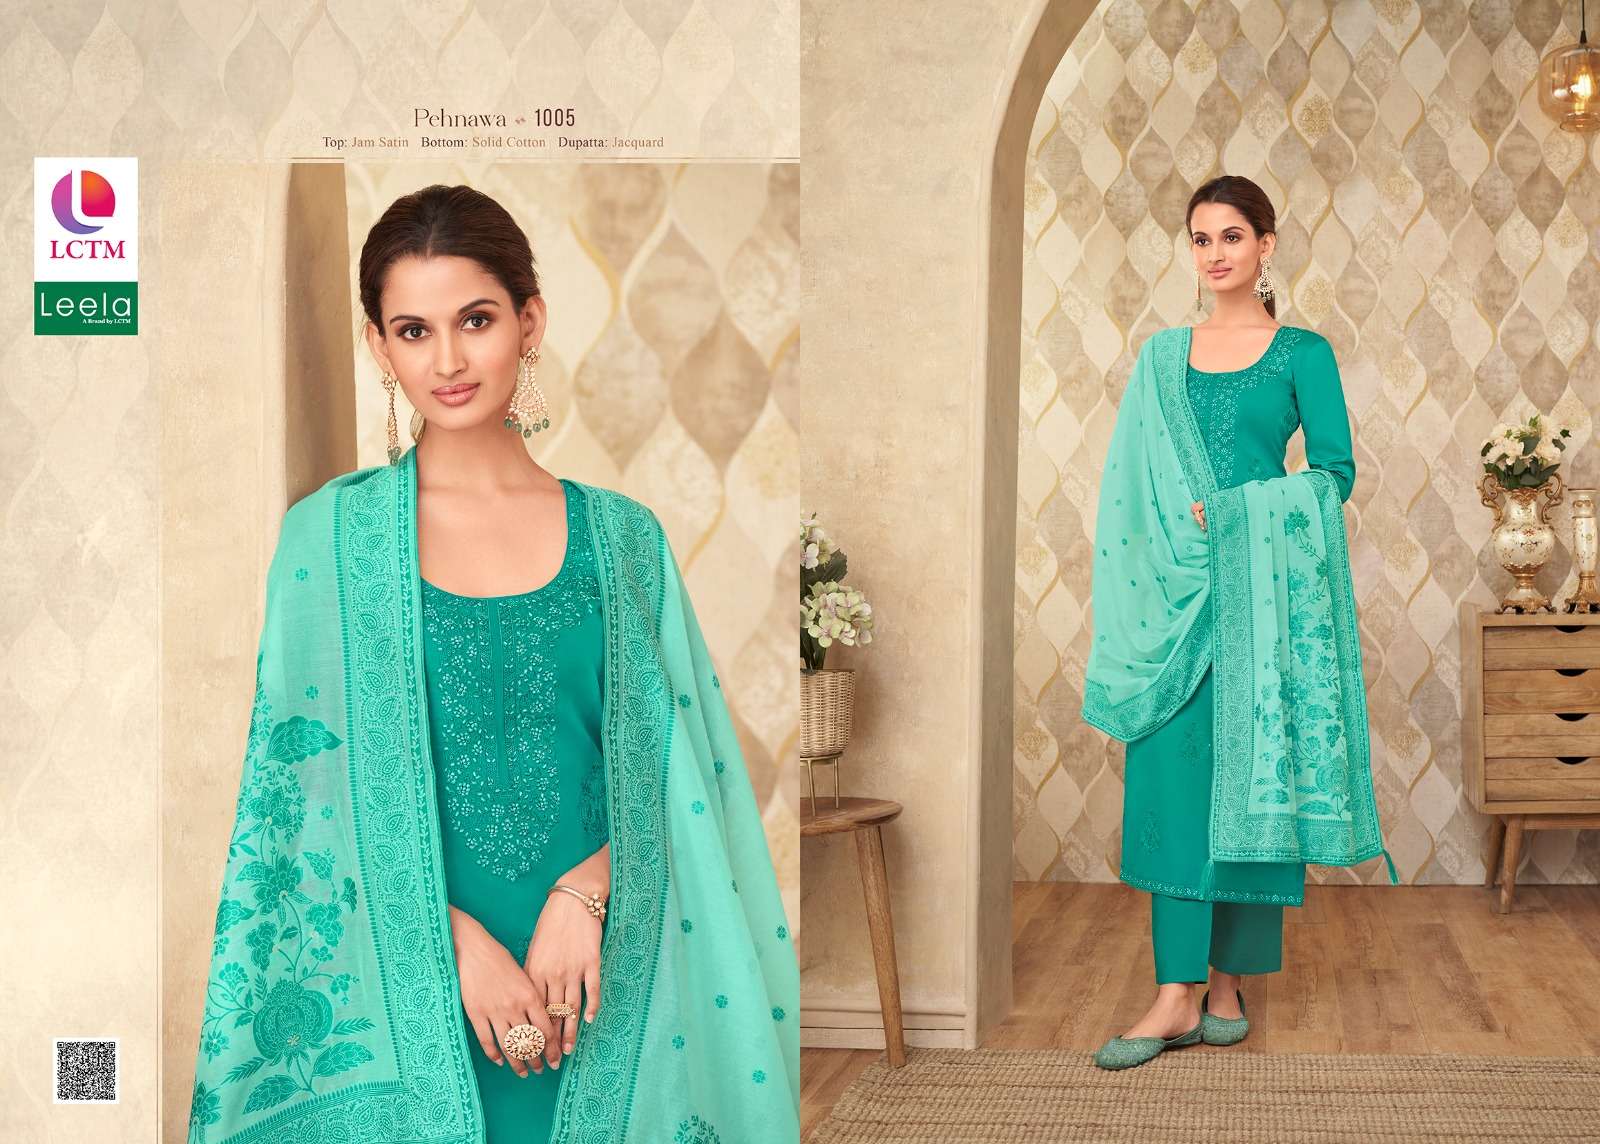 leela pehnawa 1001-1006 series exclusive designer salwar kameez catalogue manufacturer surat 